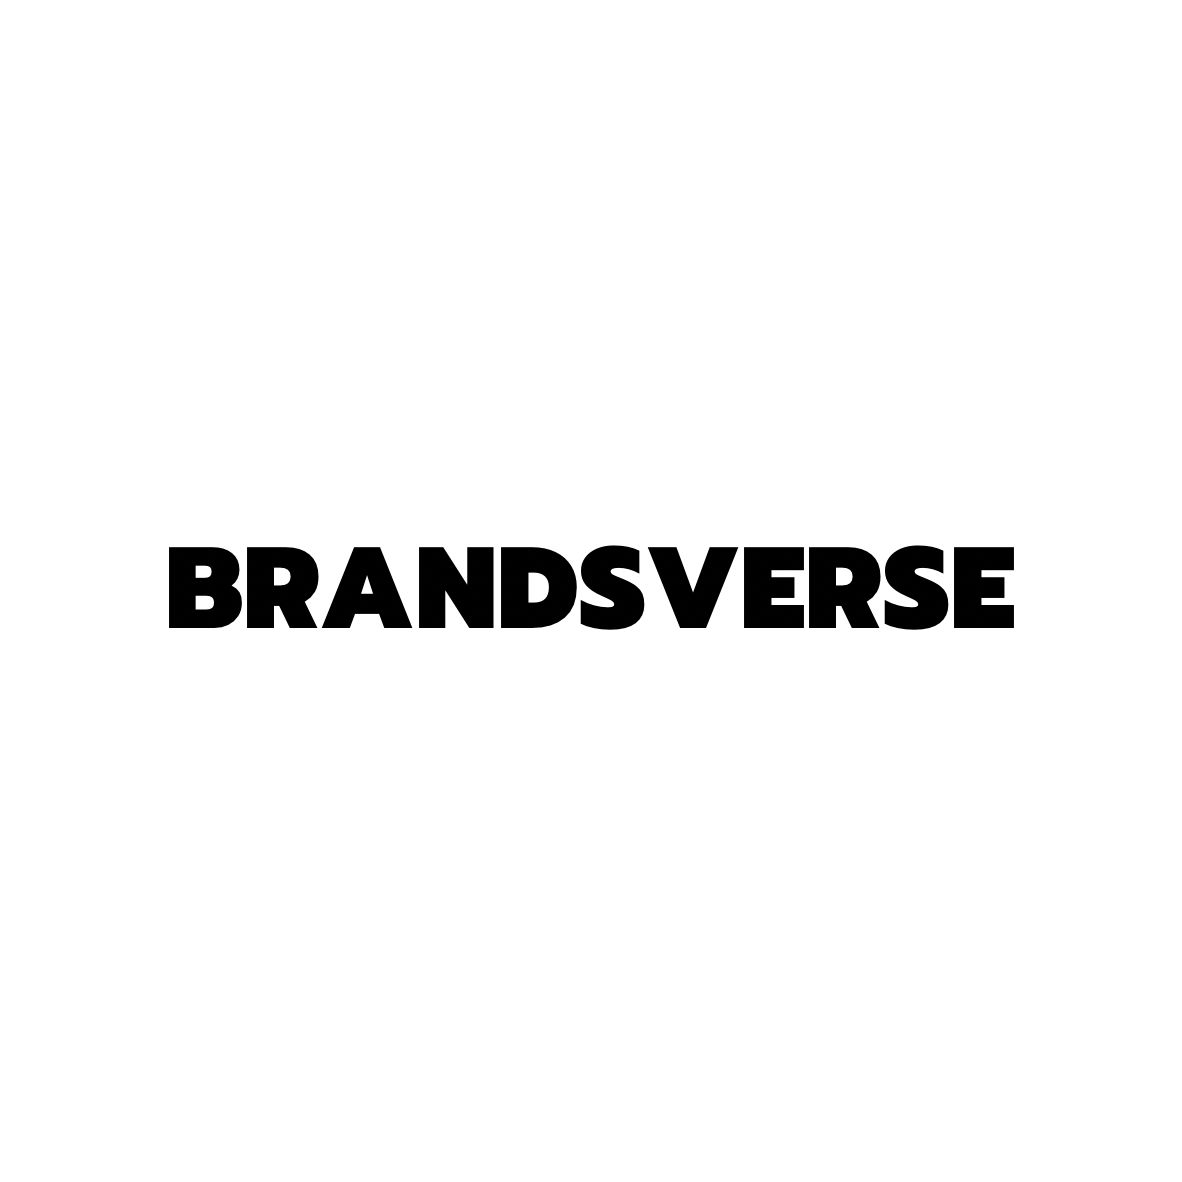 Brandsverse